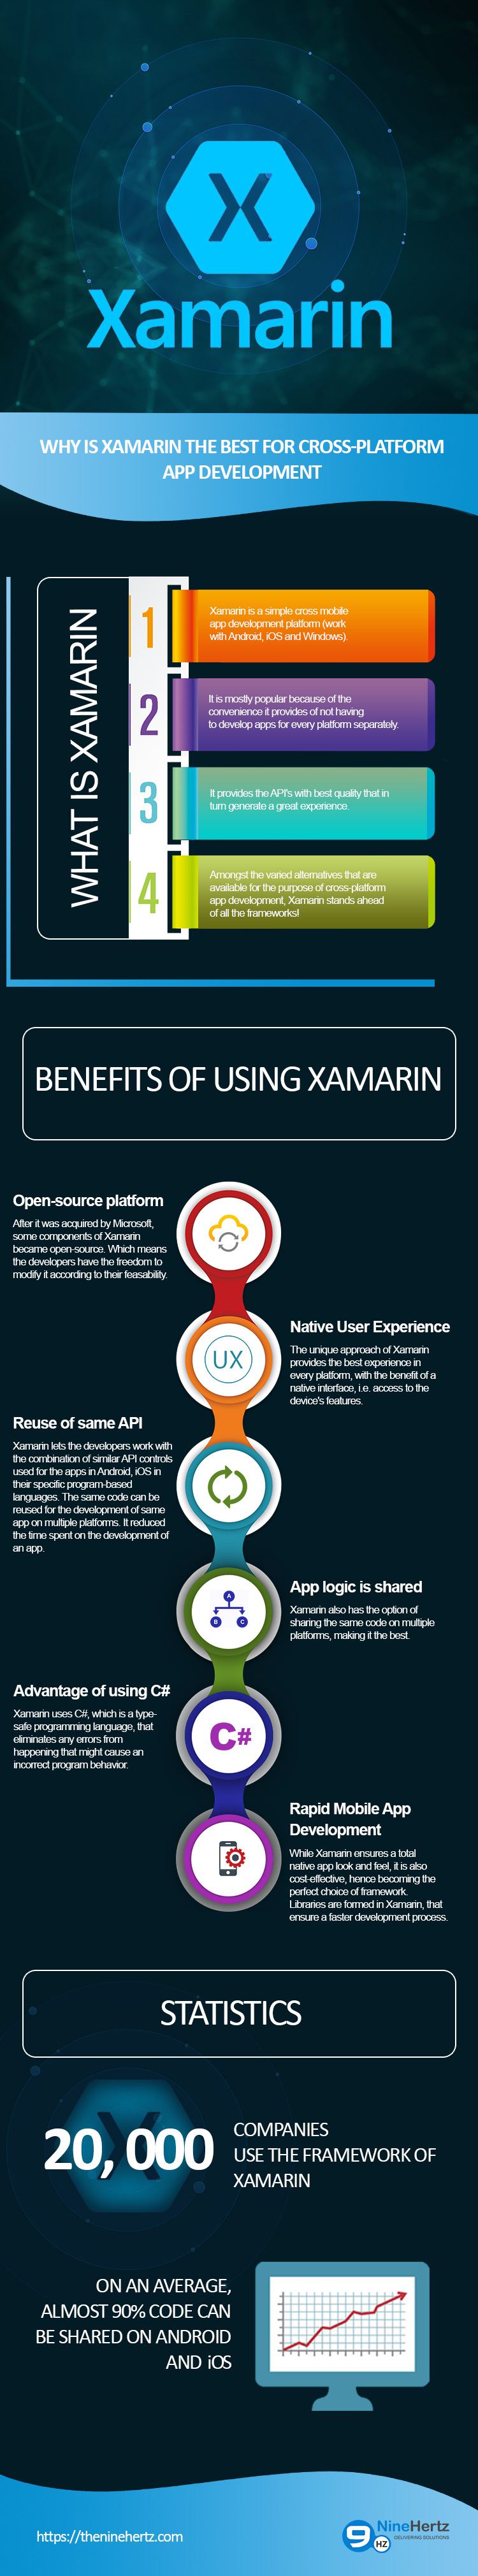 Xamarin the best for Cross-Platform App Development? infographic